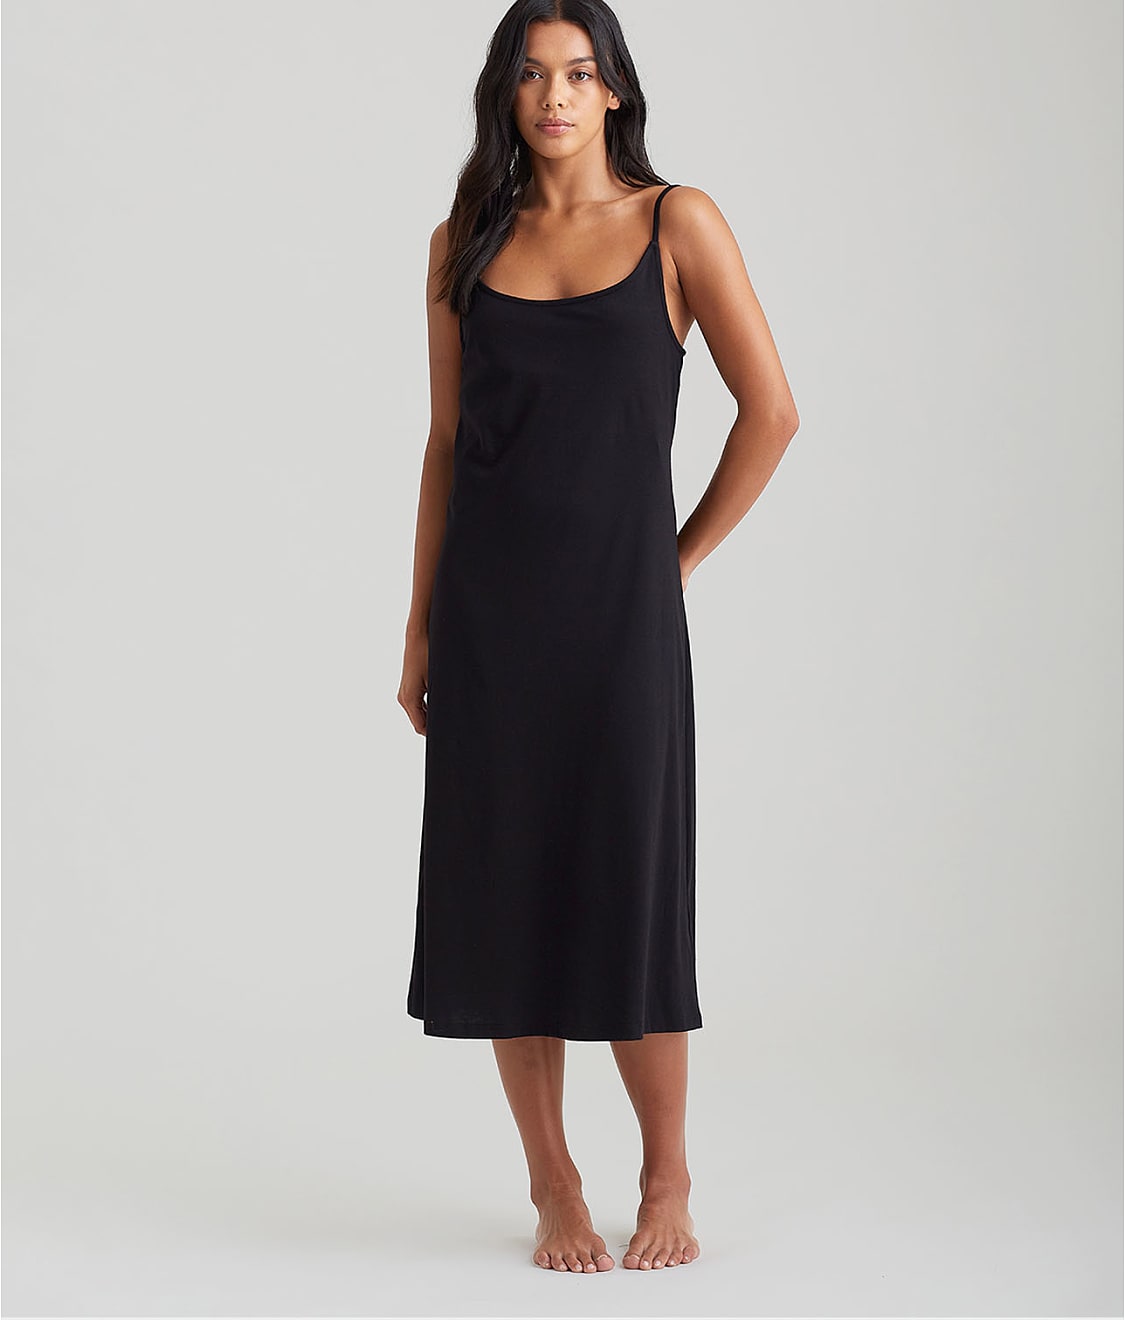 Women's Modal Shelf Bra Sleepwear Stretch Chemise Nightgown Full